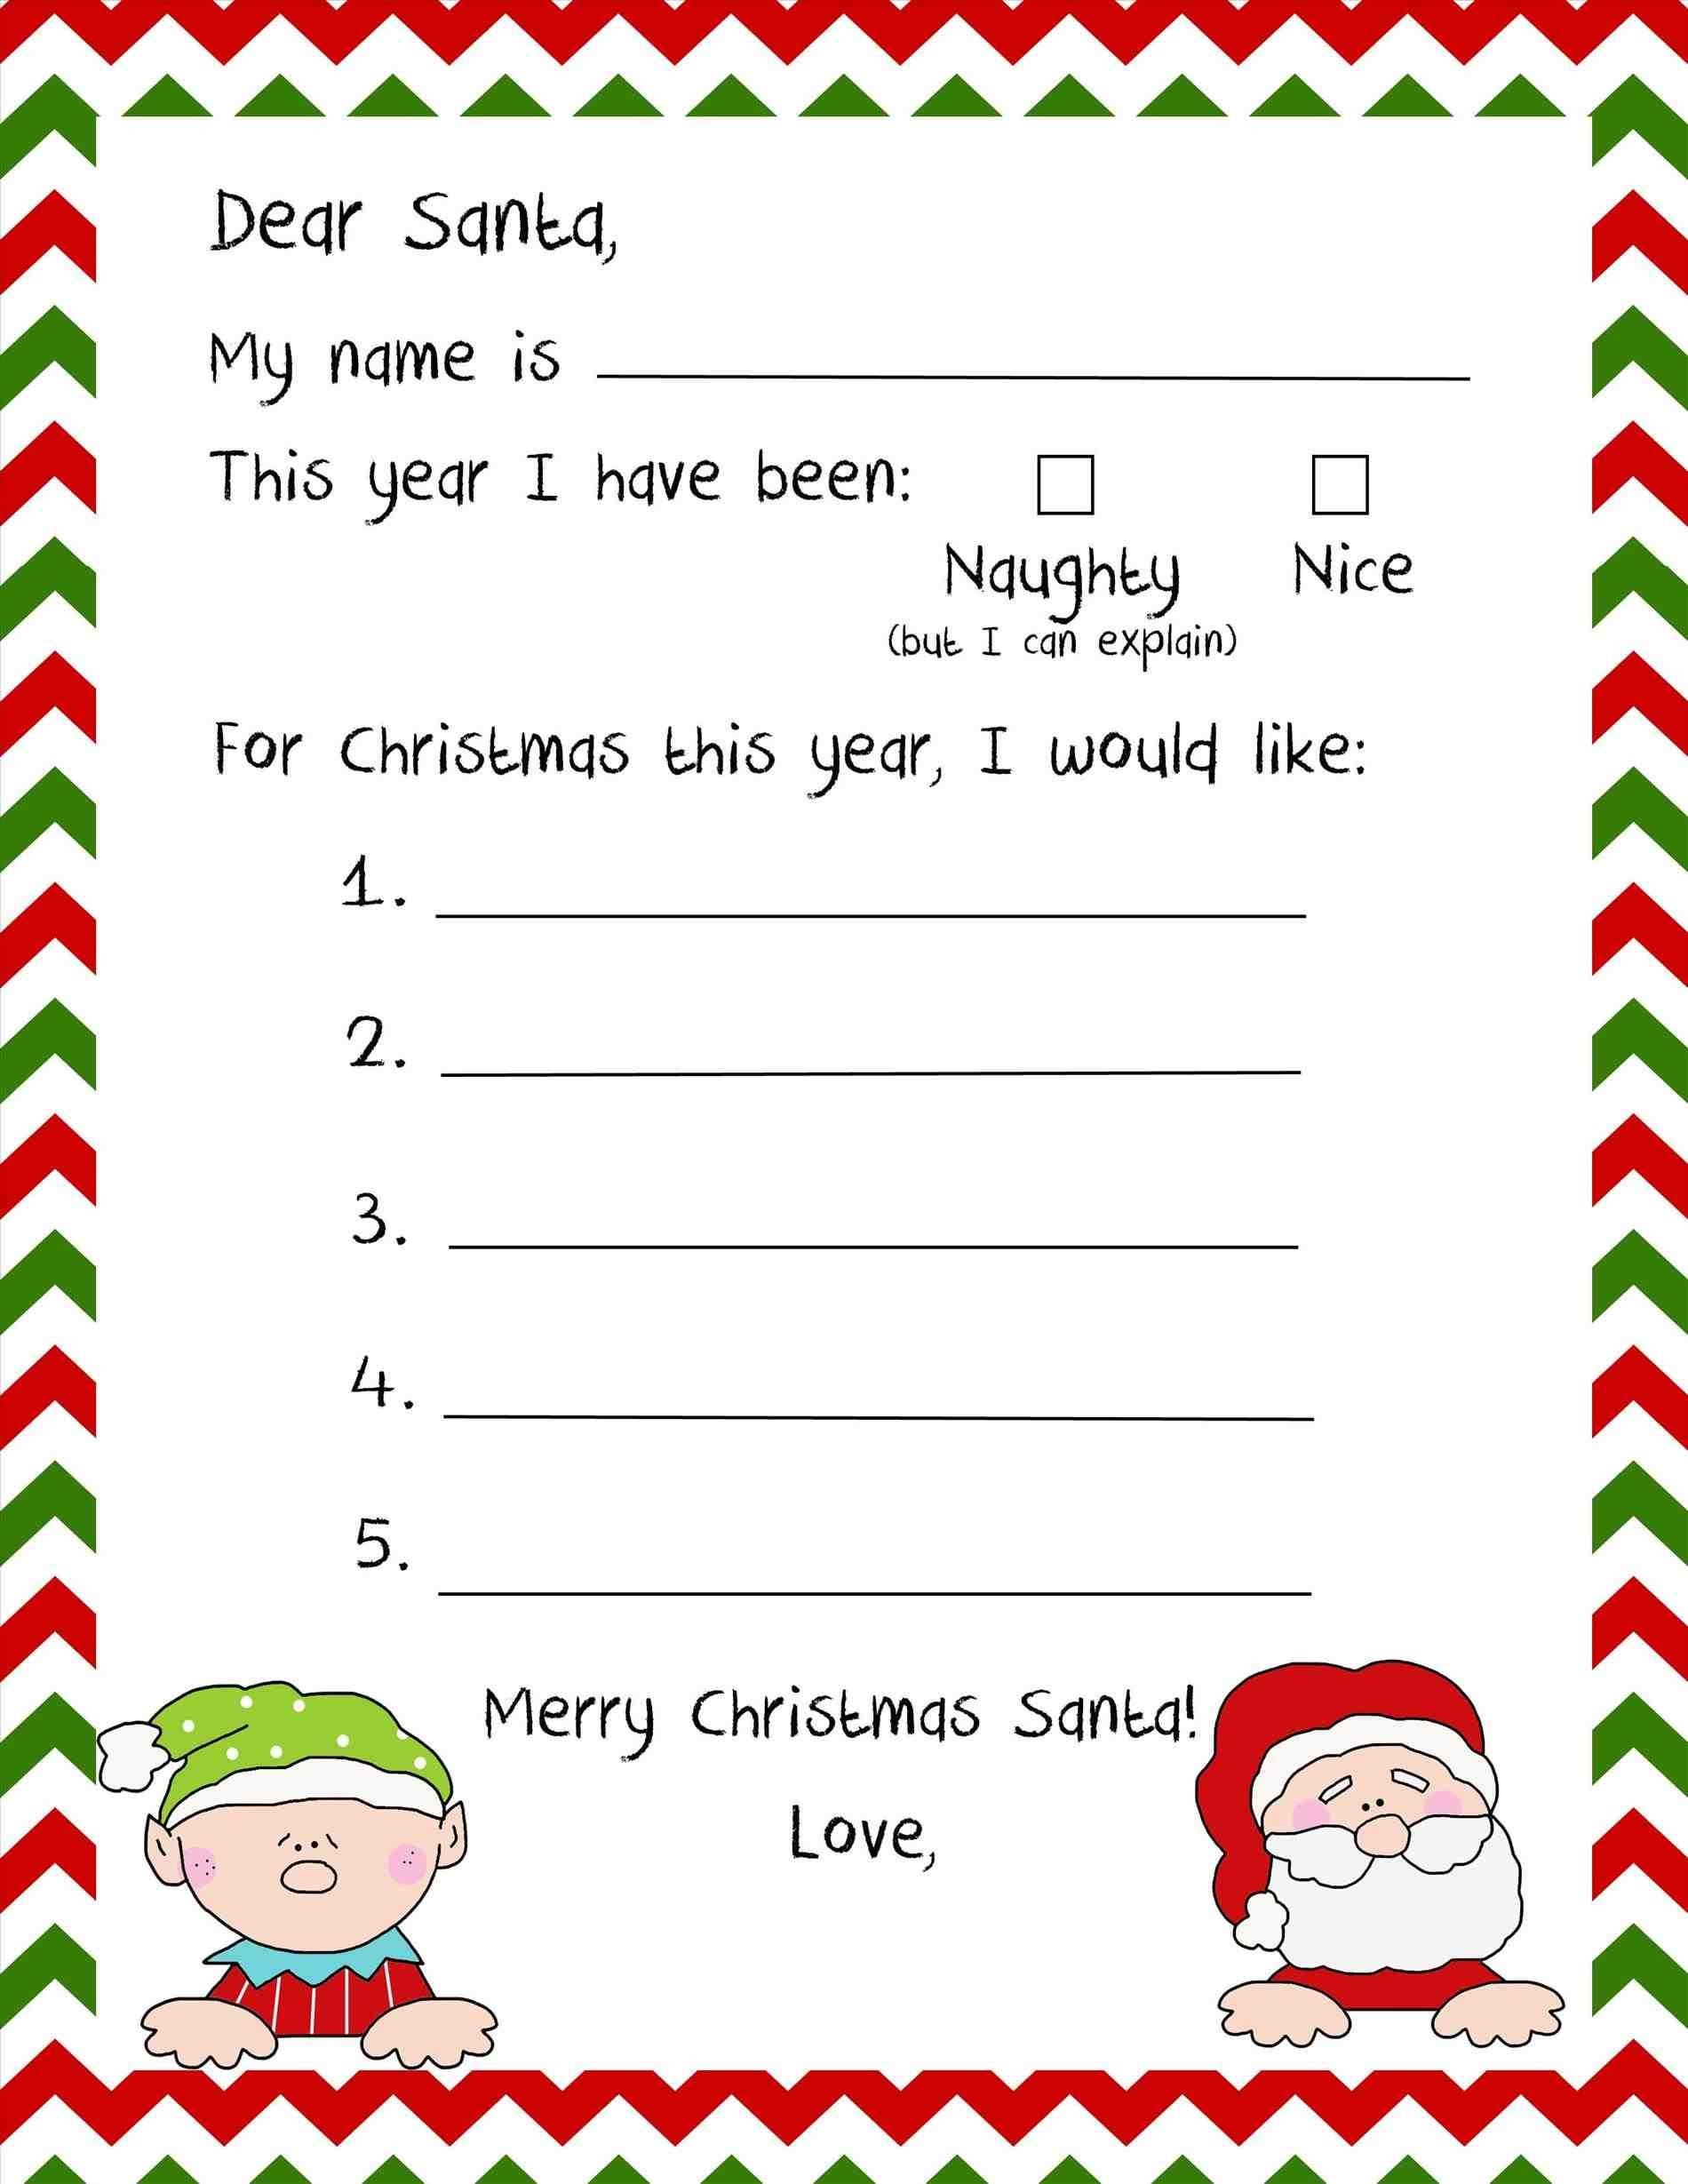 stationary-for-kids-to-write-santa-free-stationery-templates-deco